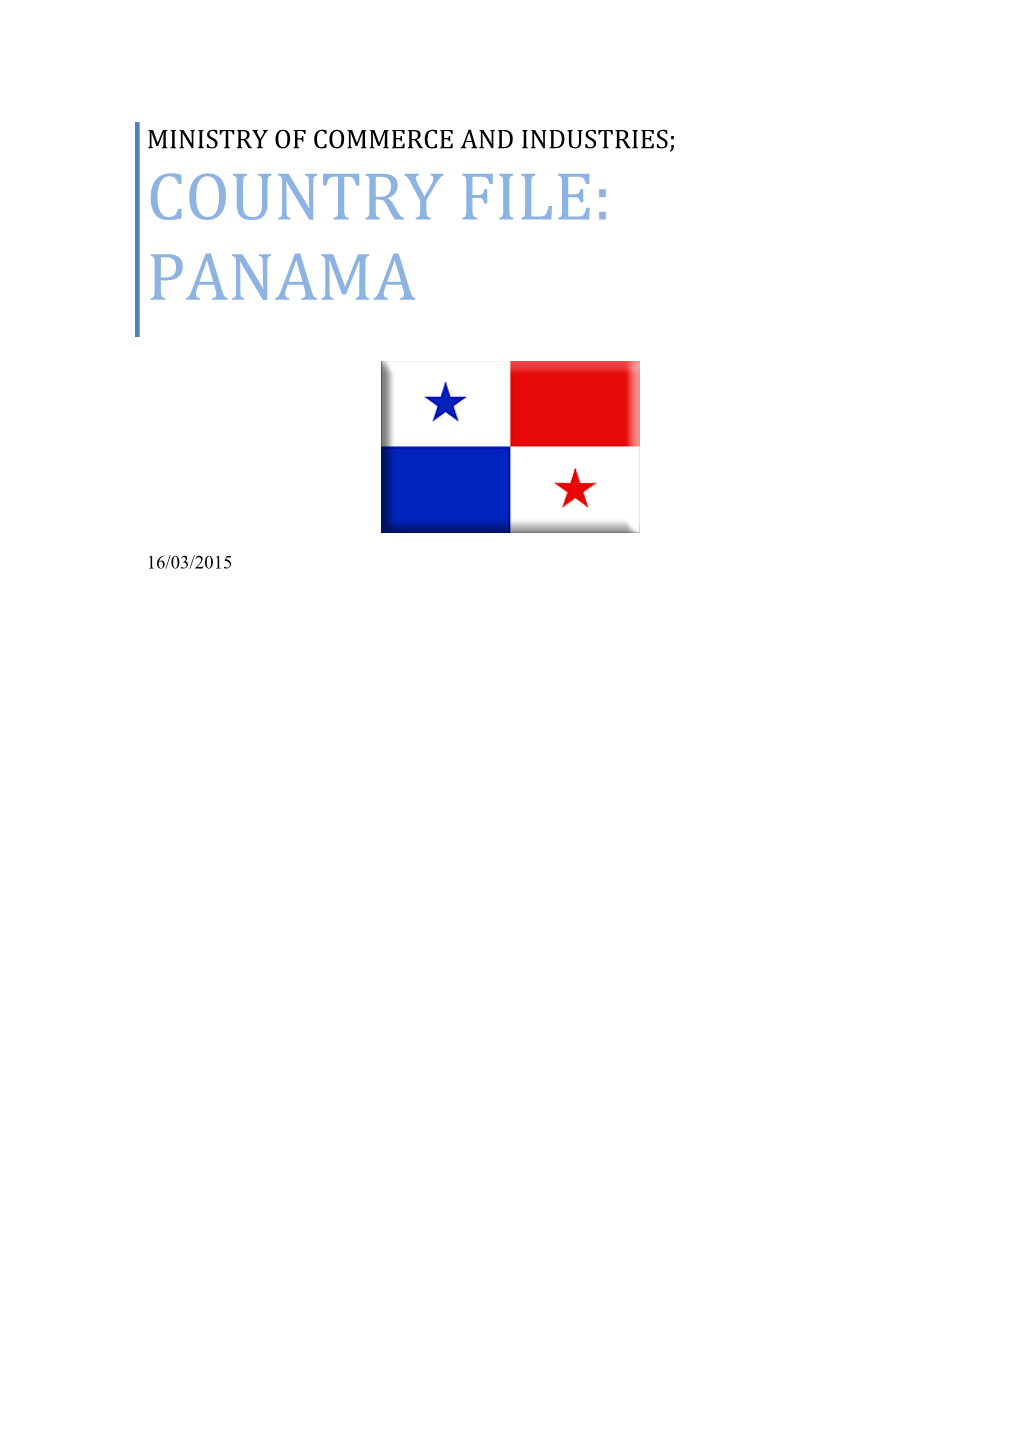 Introduction to Panama Economy